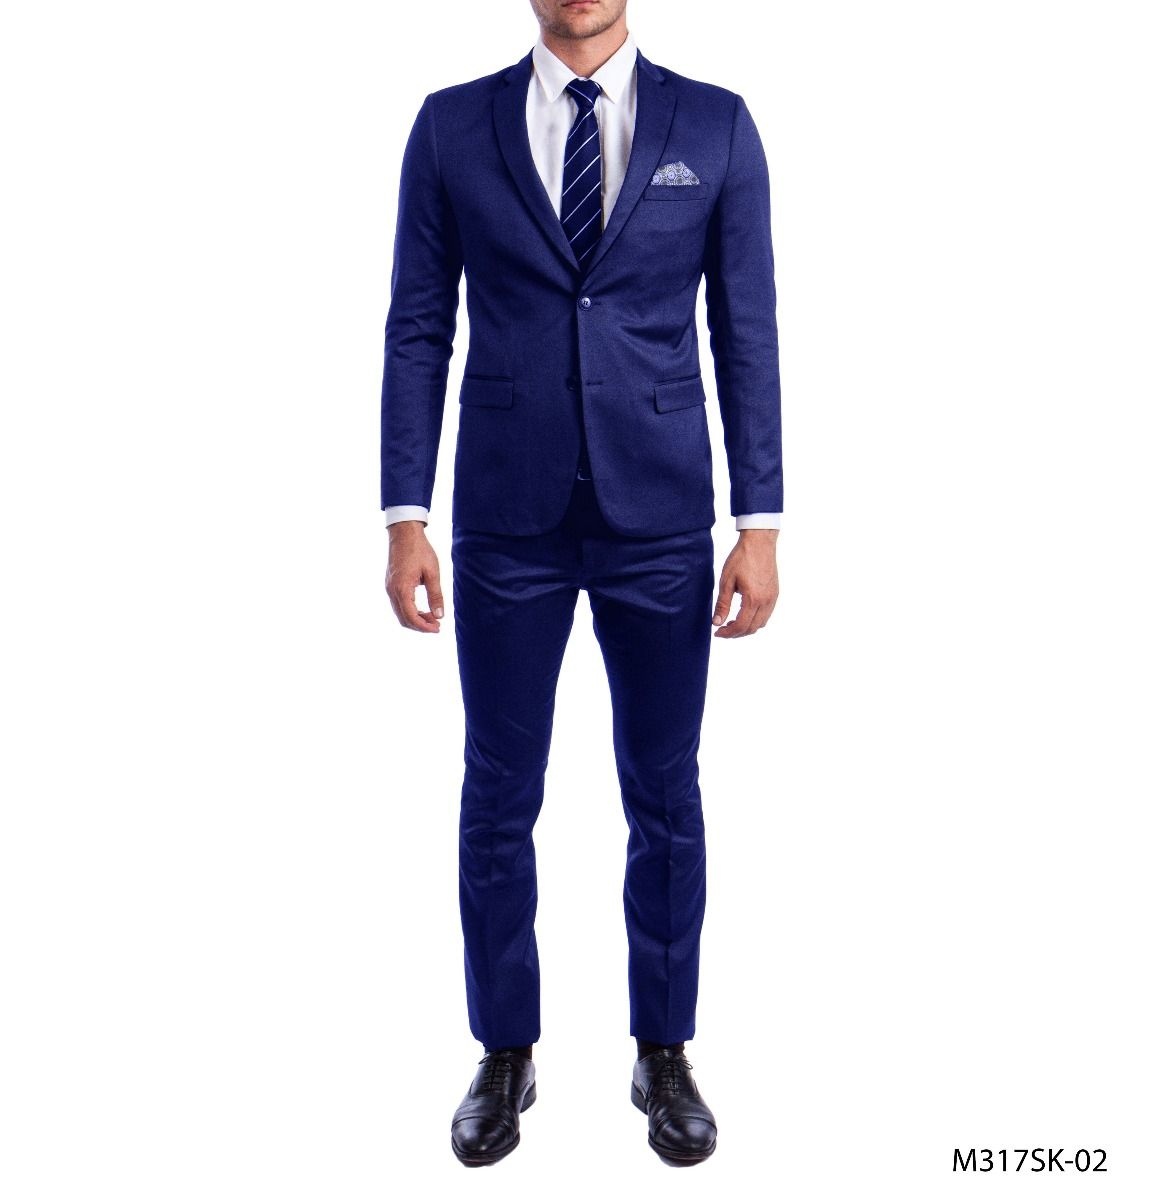 Sean Alexander Men's 2-Piece Skinny Fit Executive Suit